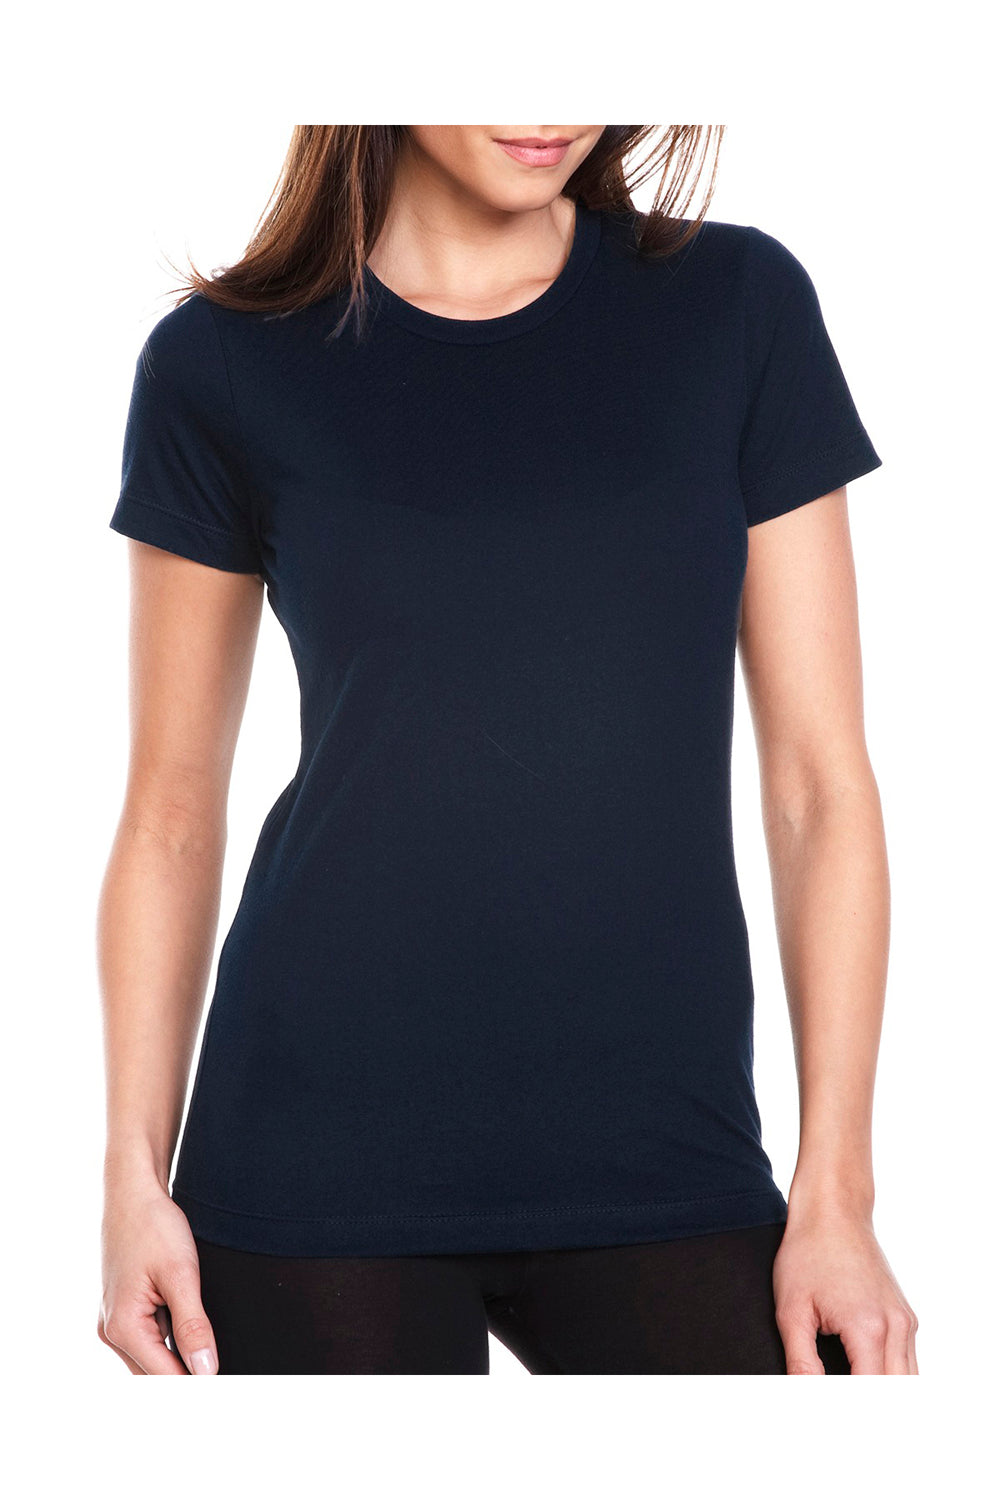 Next Level N3900 Womens Boyfriend Fine Jersey Short Sleeve Crewneck T-Shirt Navy Blue Front